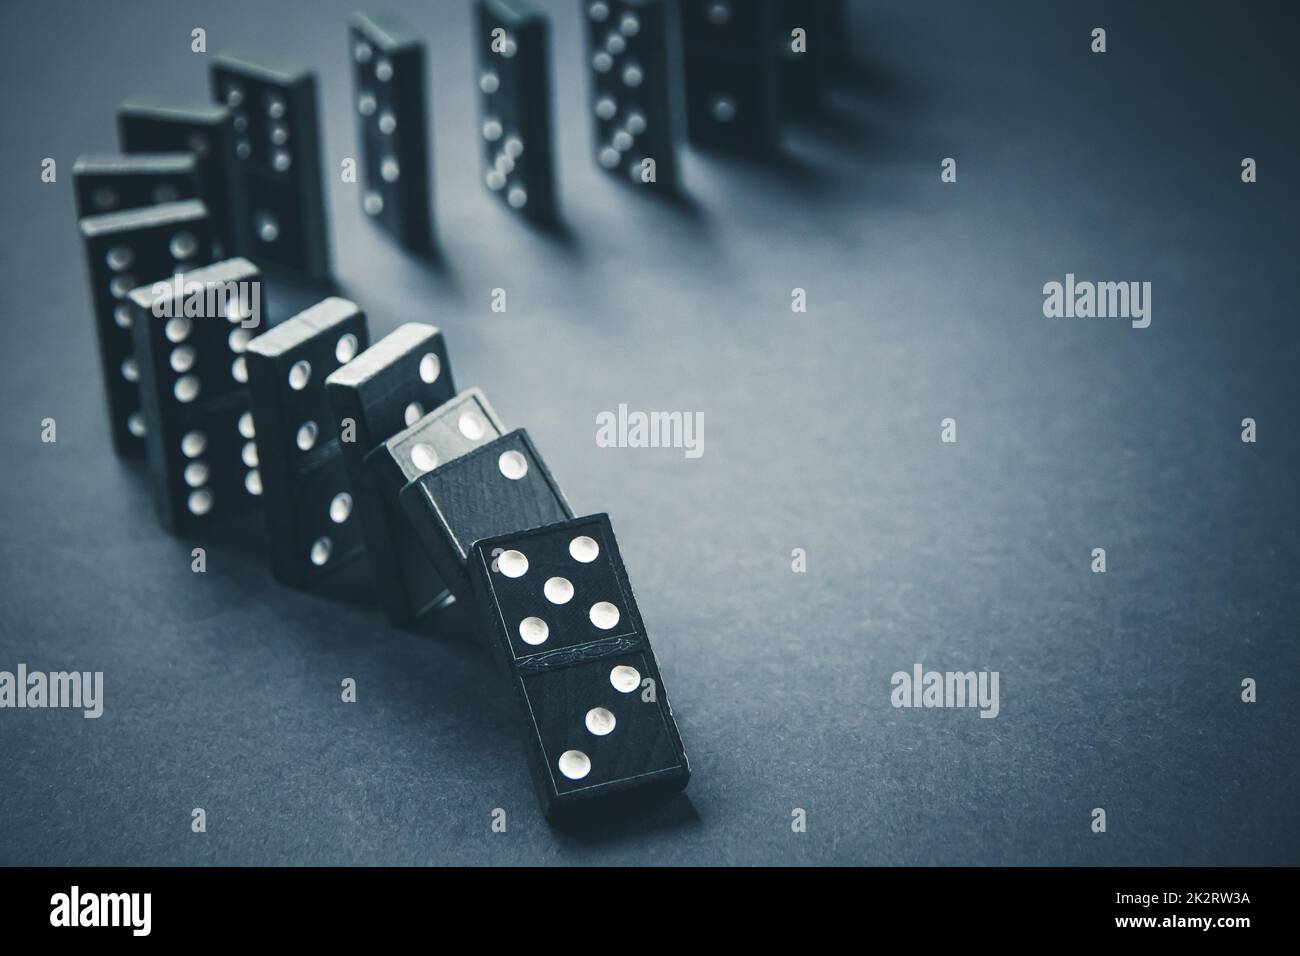 Black dominoes chain on dark table background Stock Photo